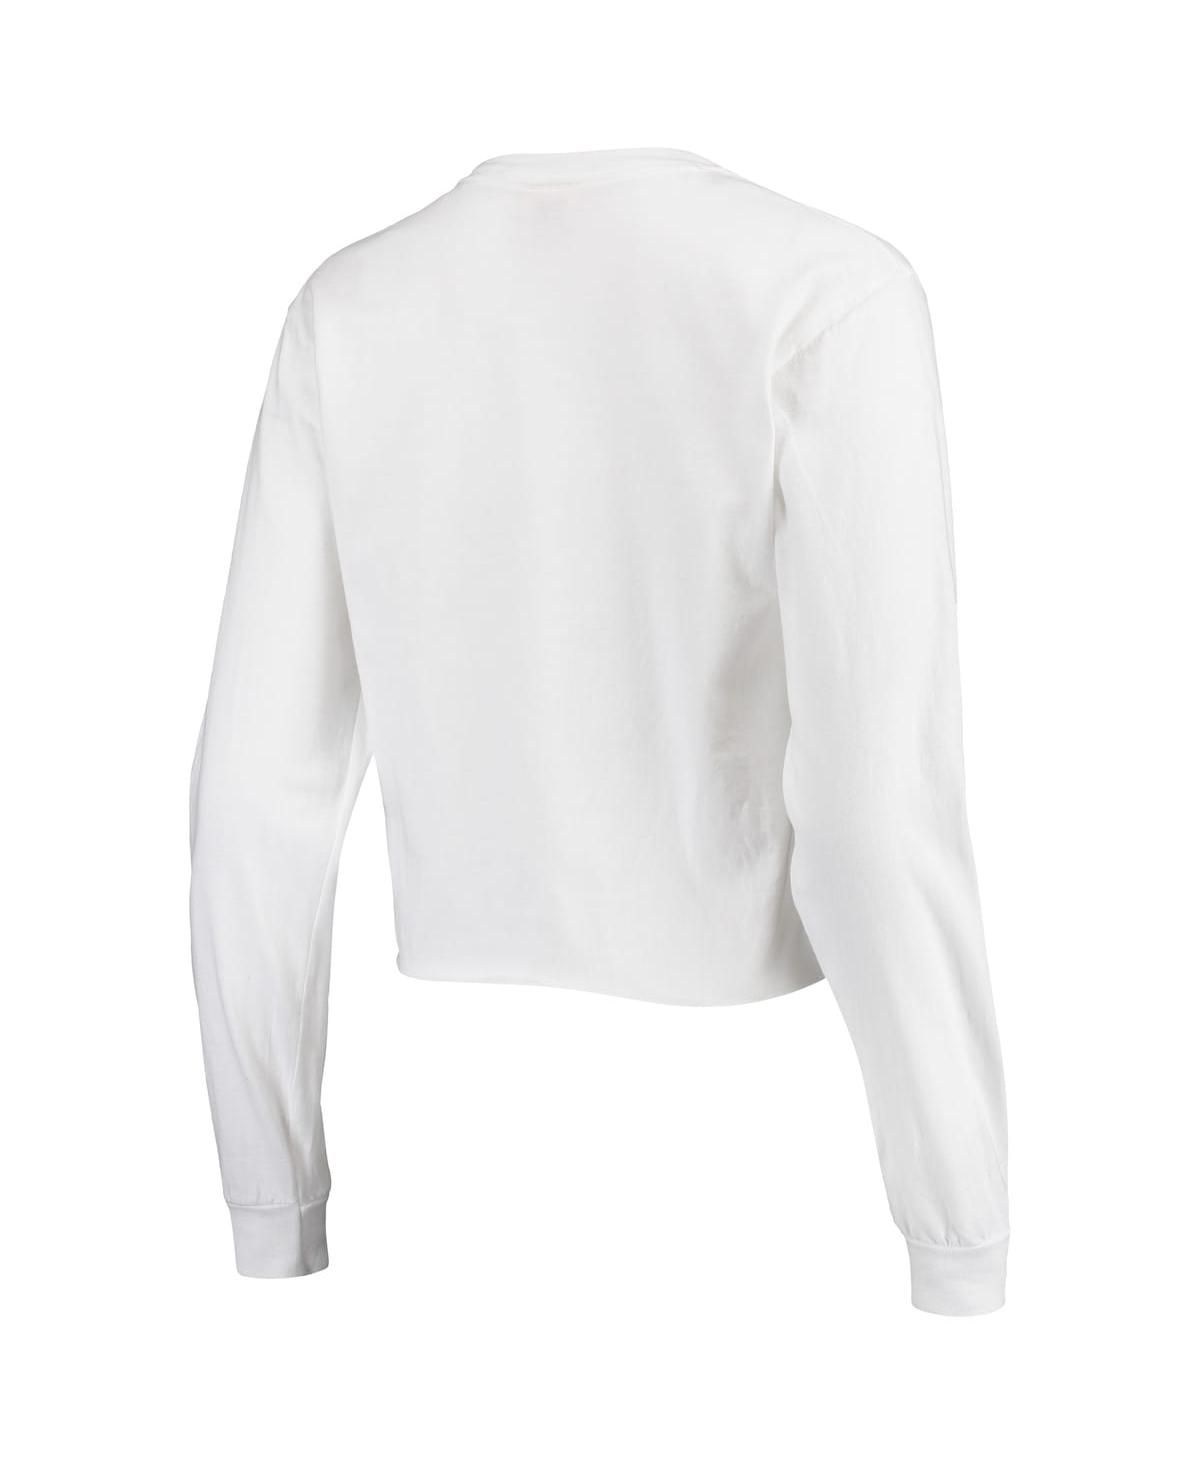 Shop Image One Women's White Texas Longhorns Retro Campus Crop Long Sleeve T-shirt